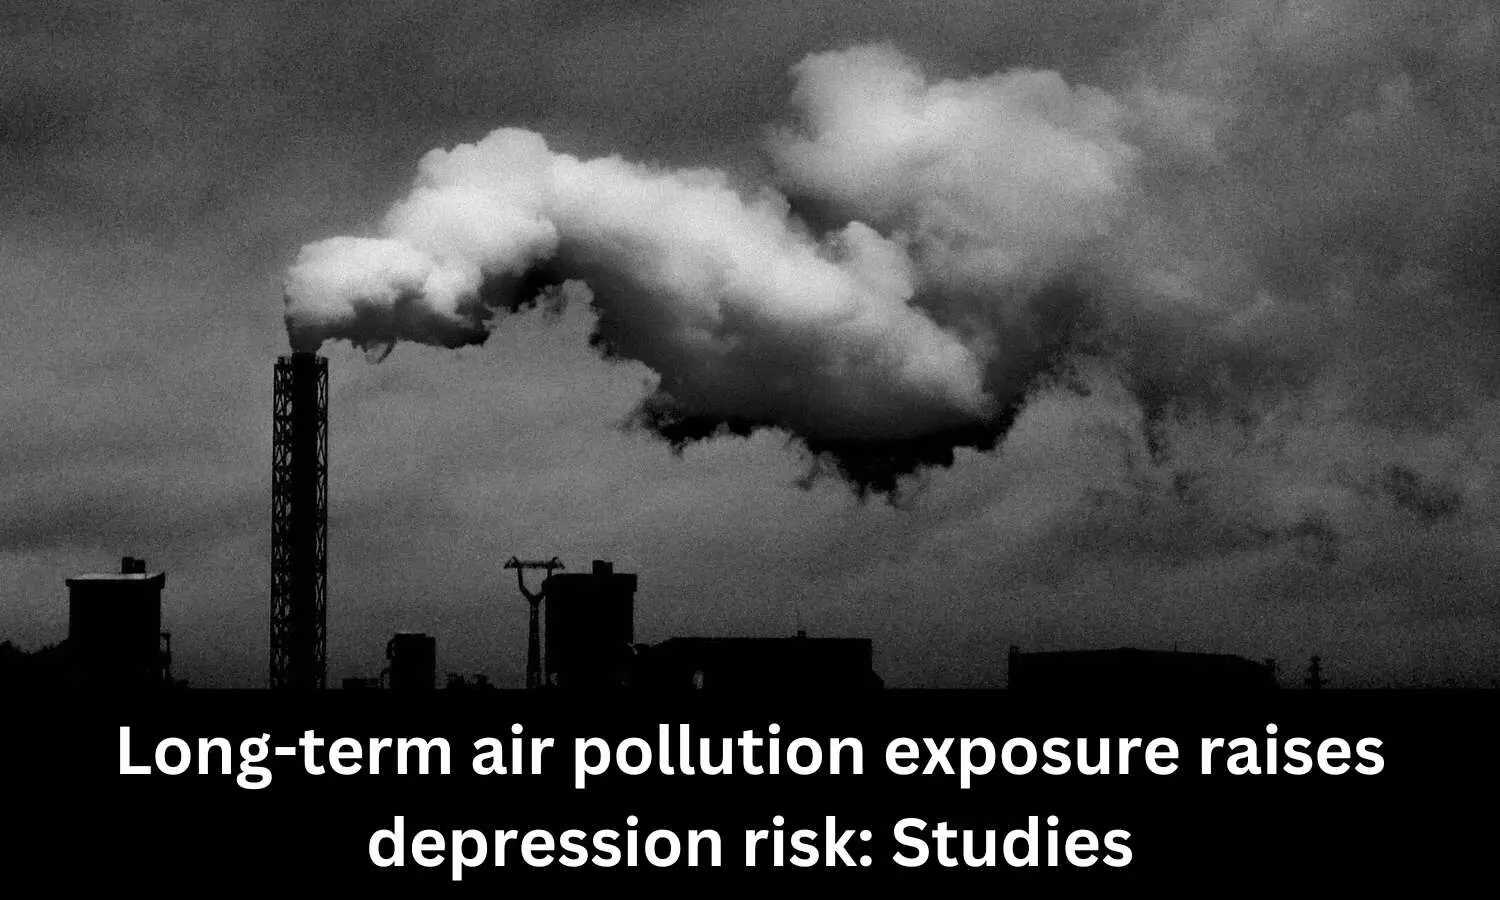 Long-term air pollution exposure raises depression risk: Studies